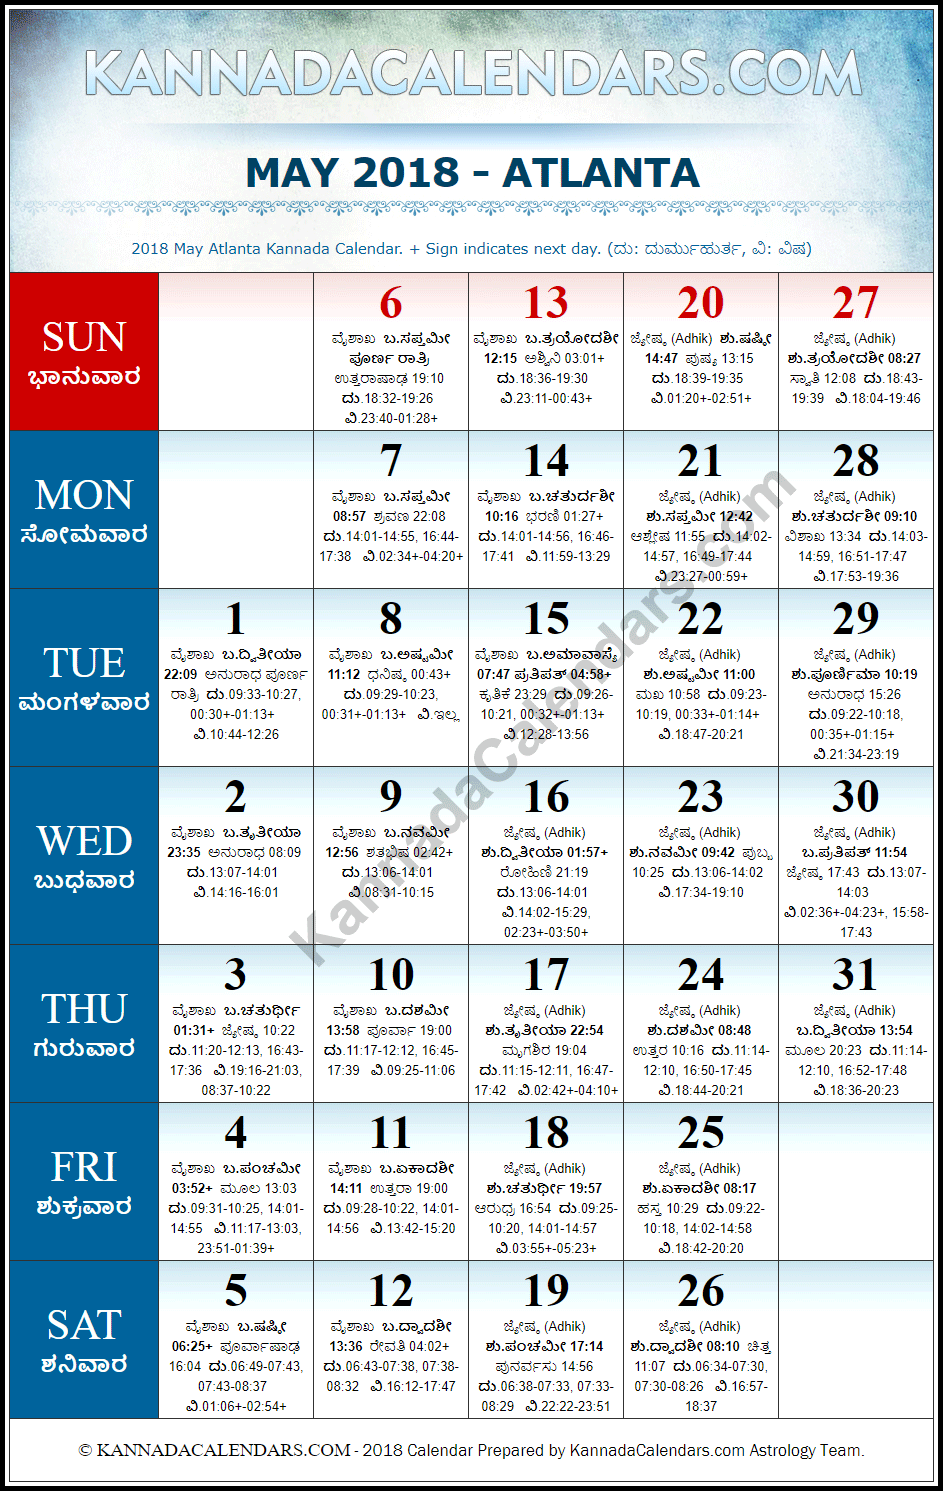 May 2018 Kannada Calendar for Atlanta, USA